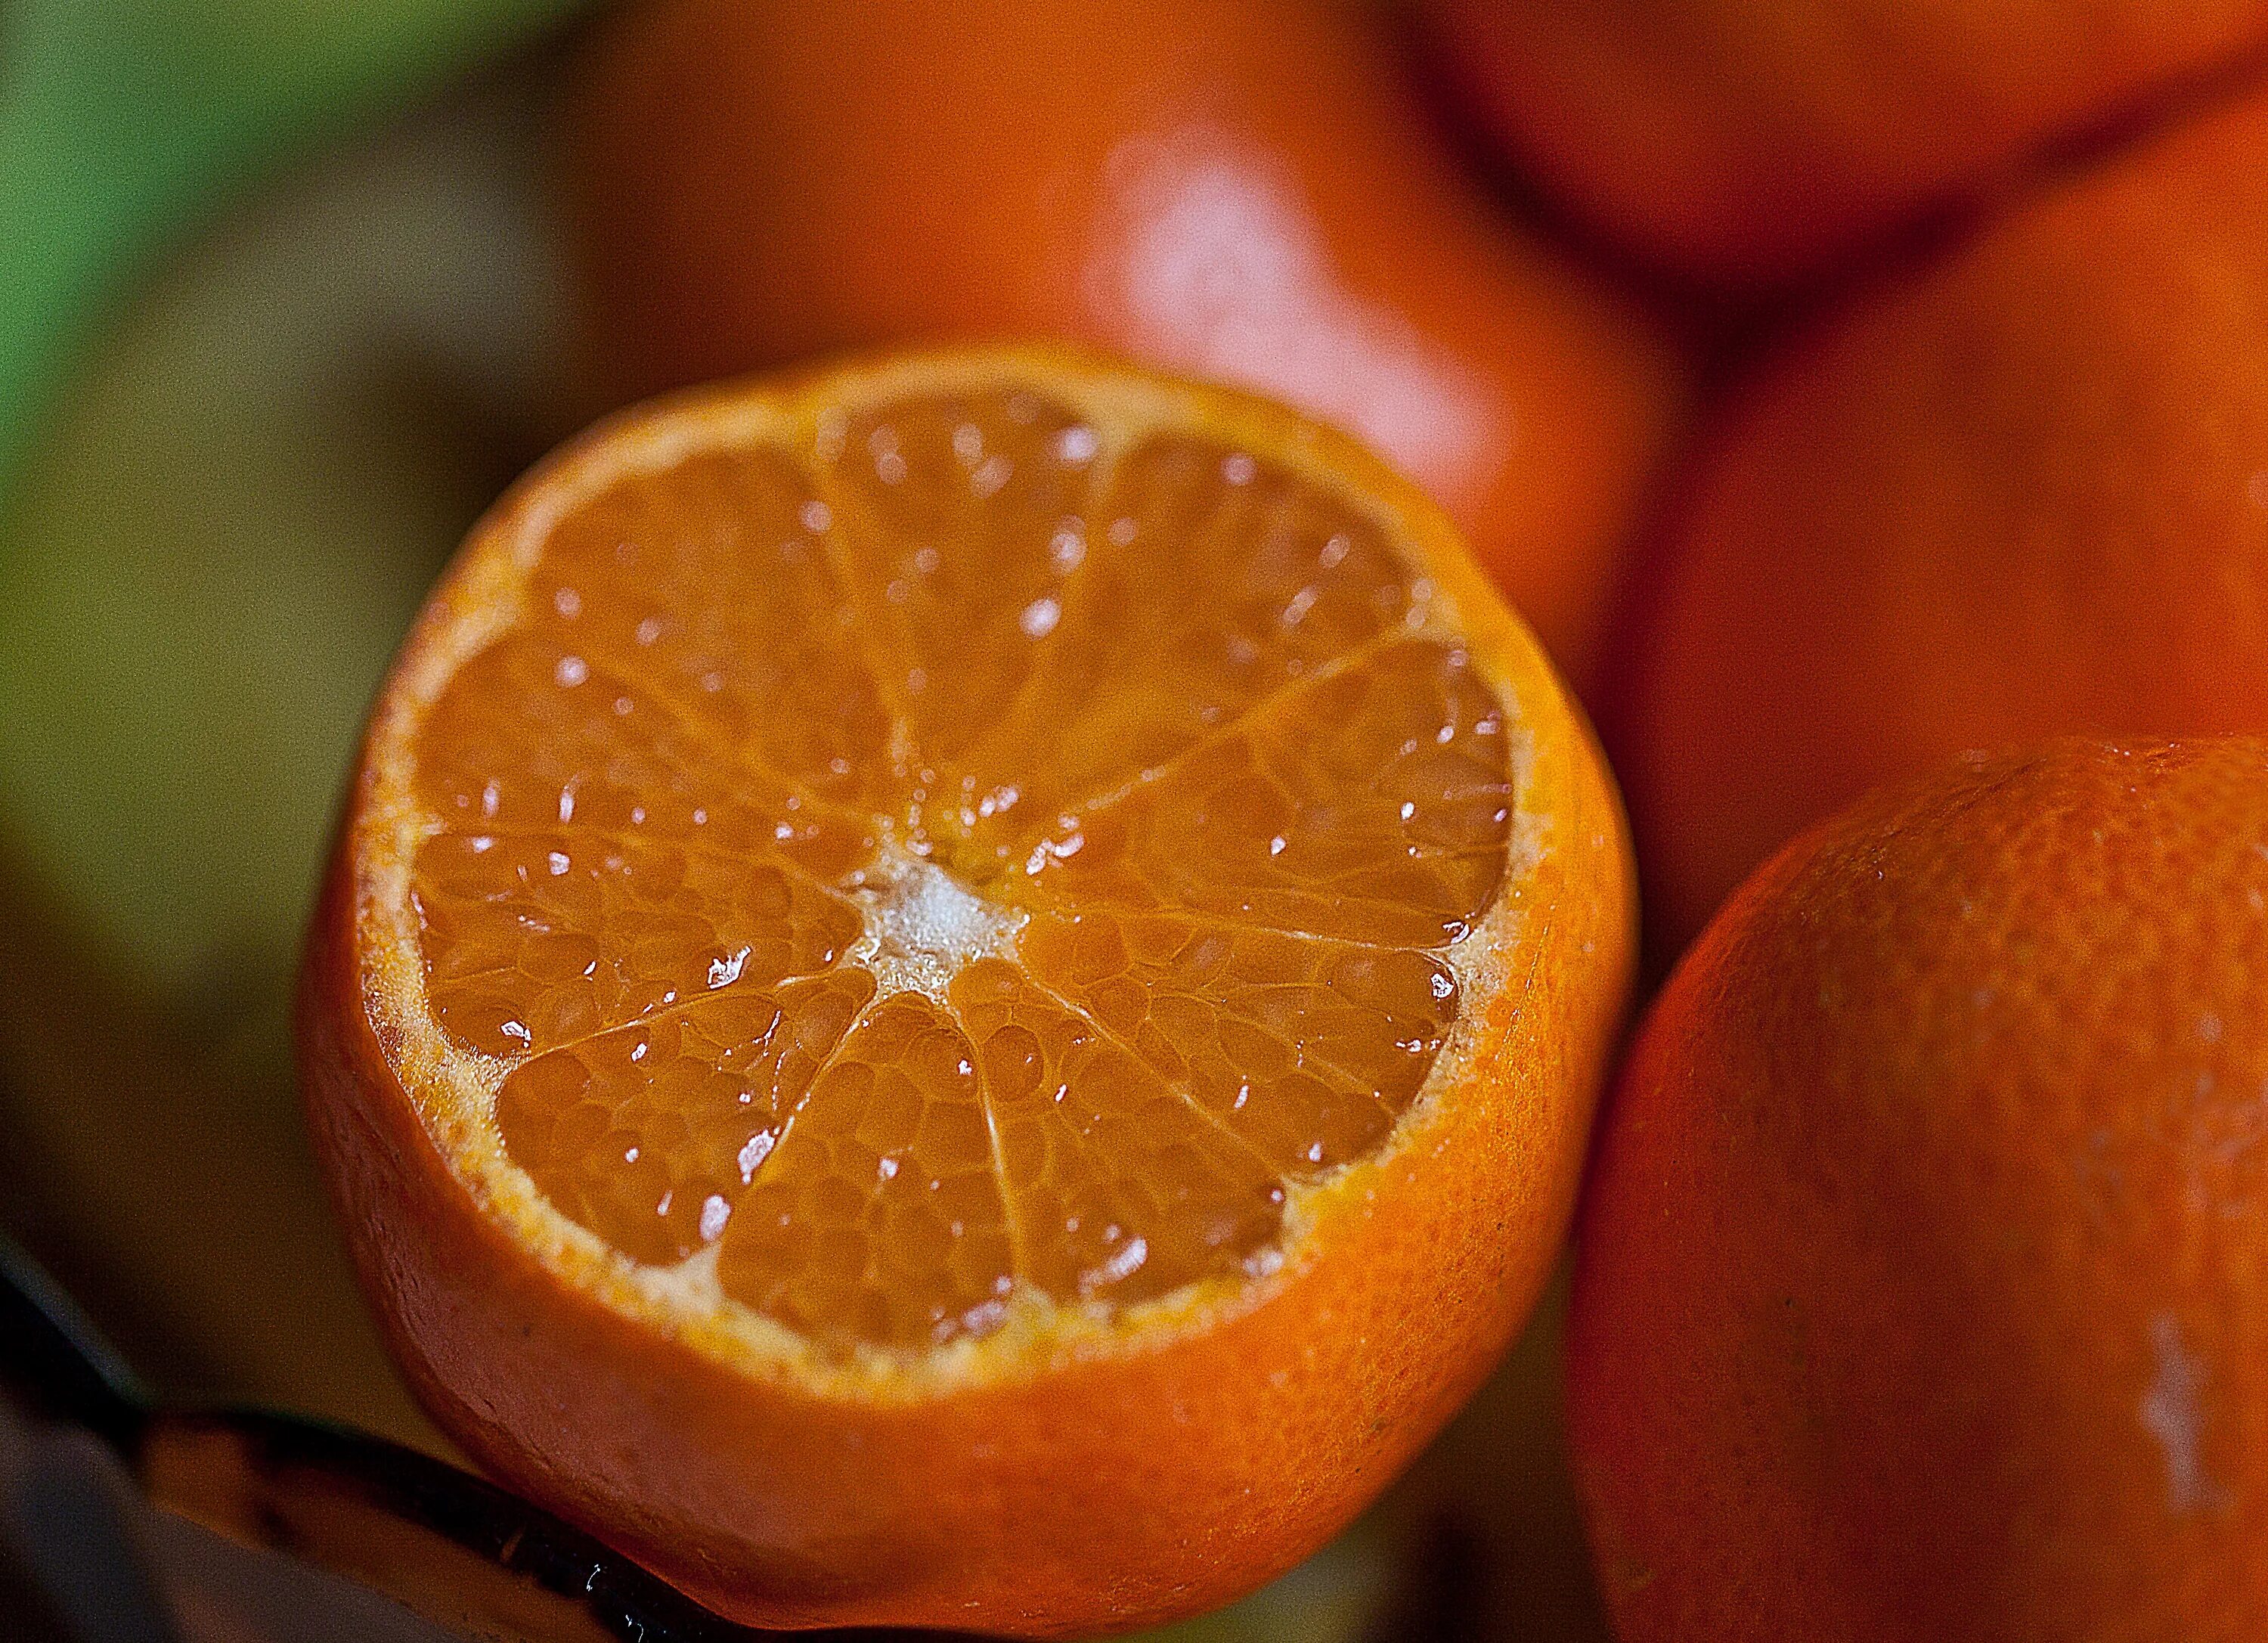 Картинки апельсин. Померанец апельсин. Плод мандарина это гесперидий. Минеола фрукт. Орендж апельсин а мандарин.